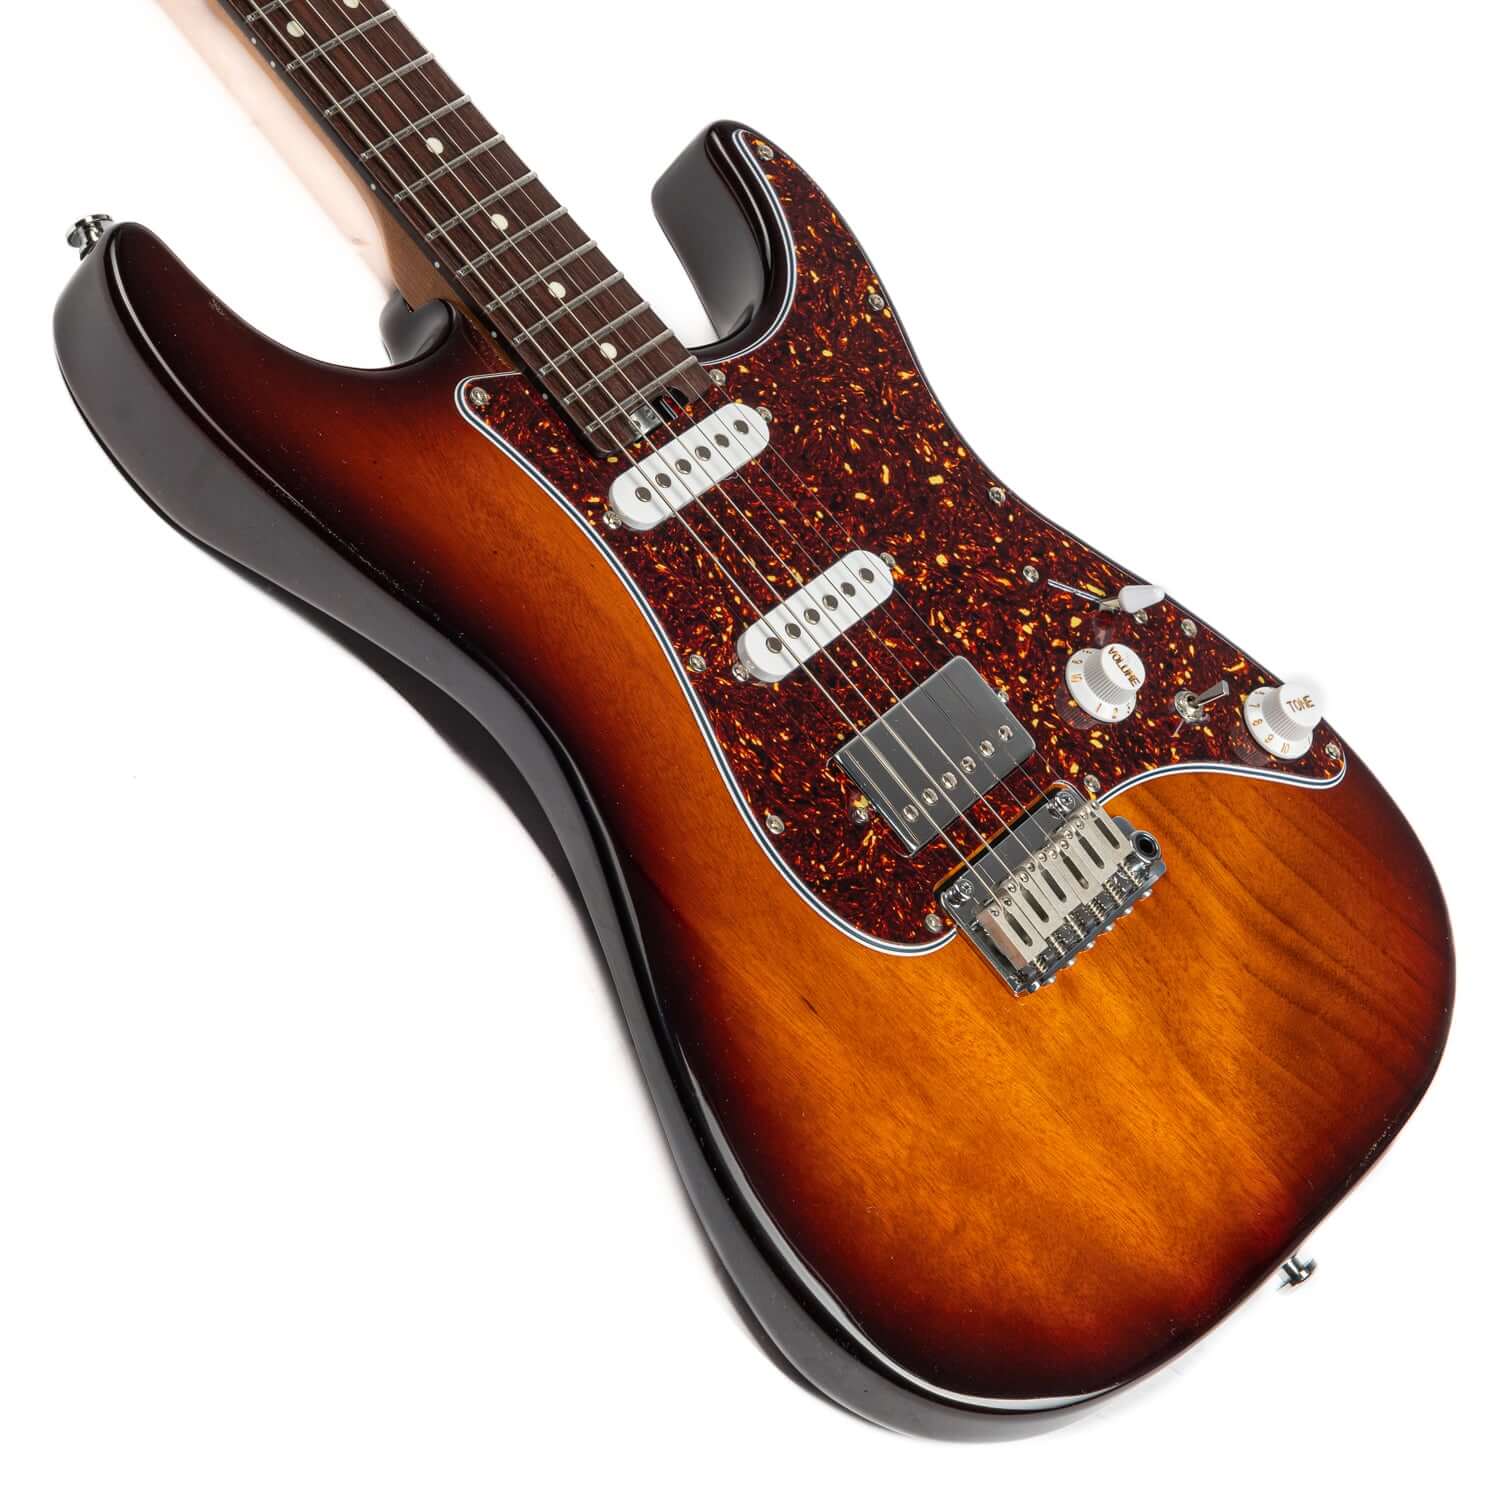 EART electric guitar DMX-9TC body